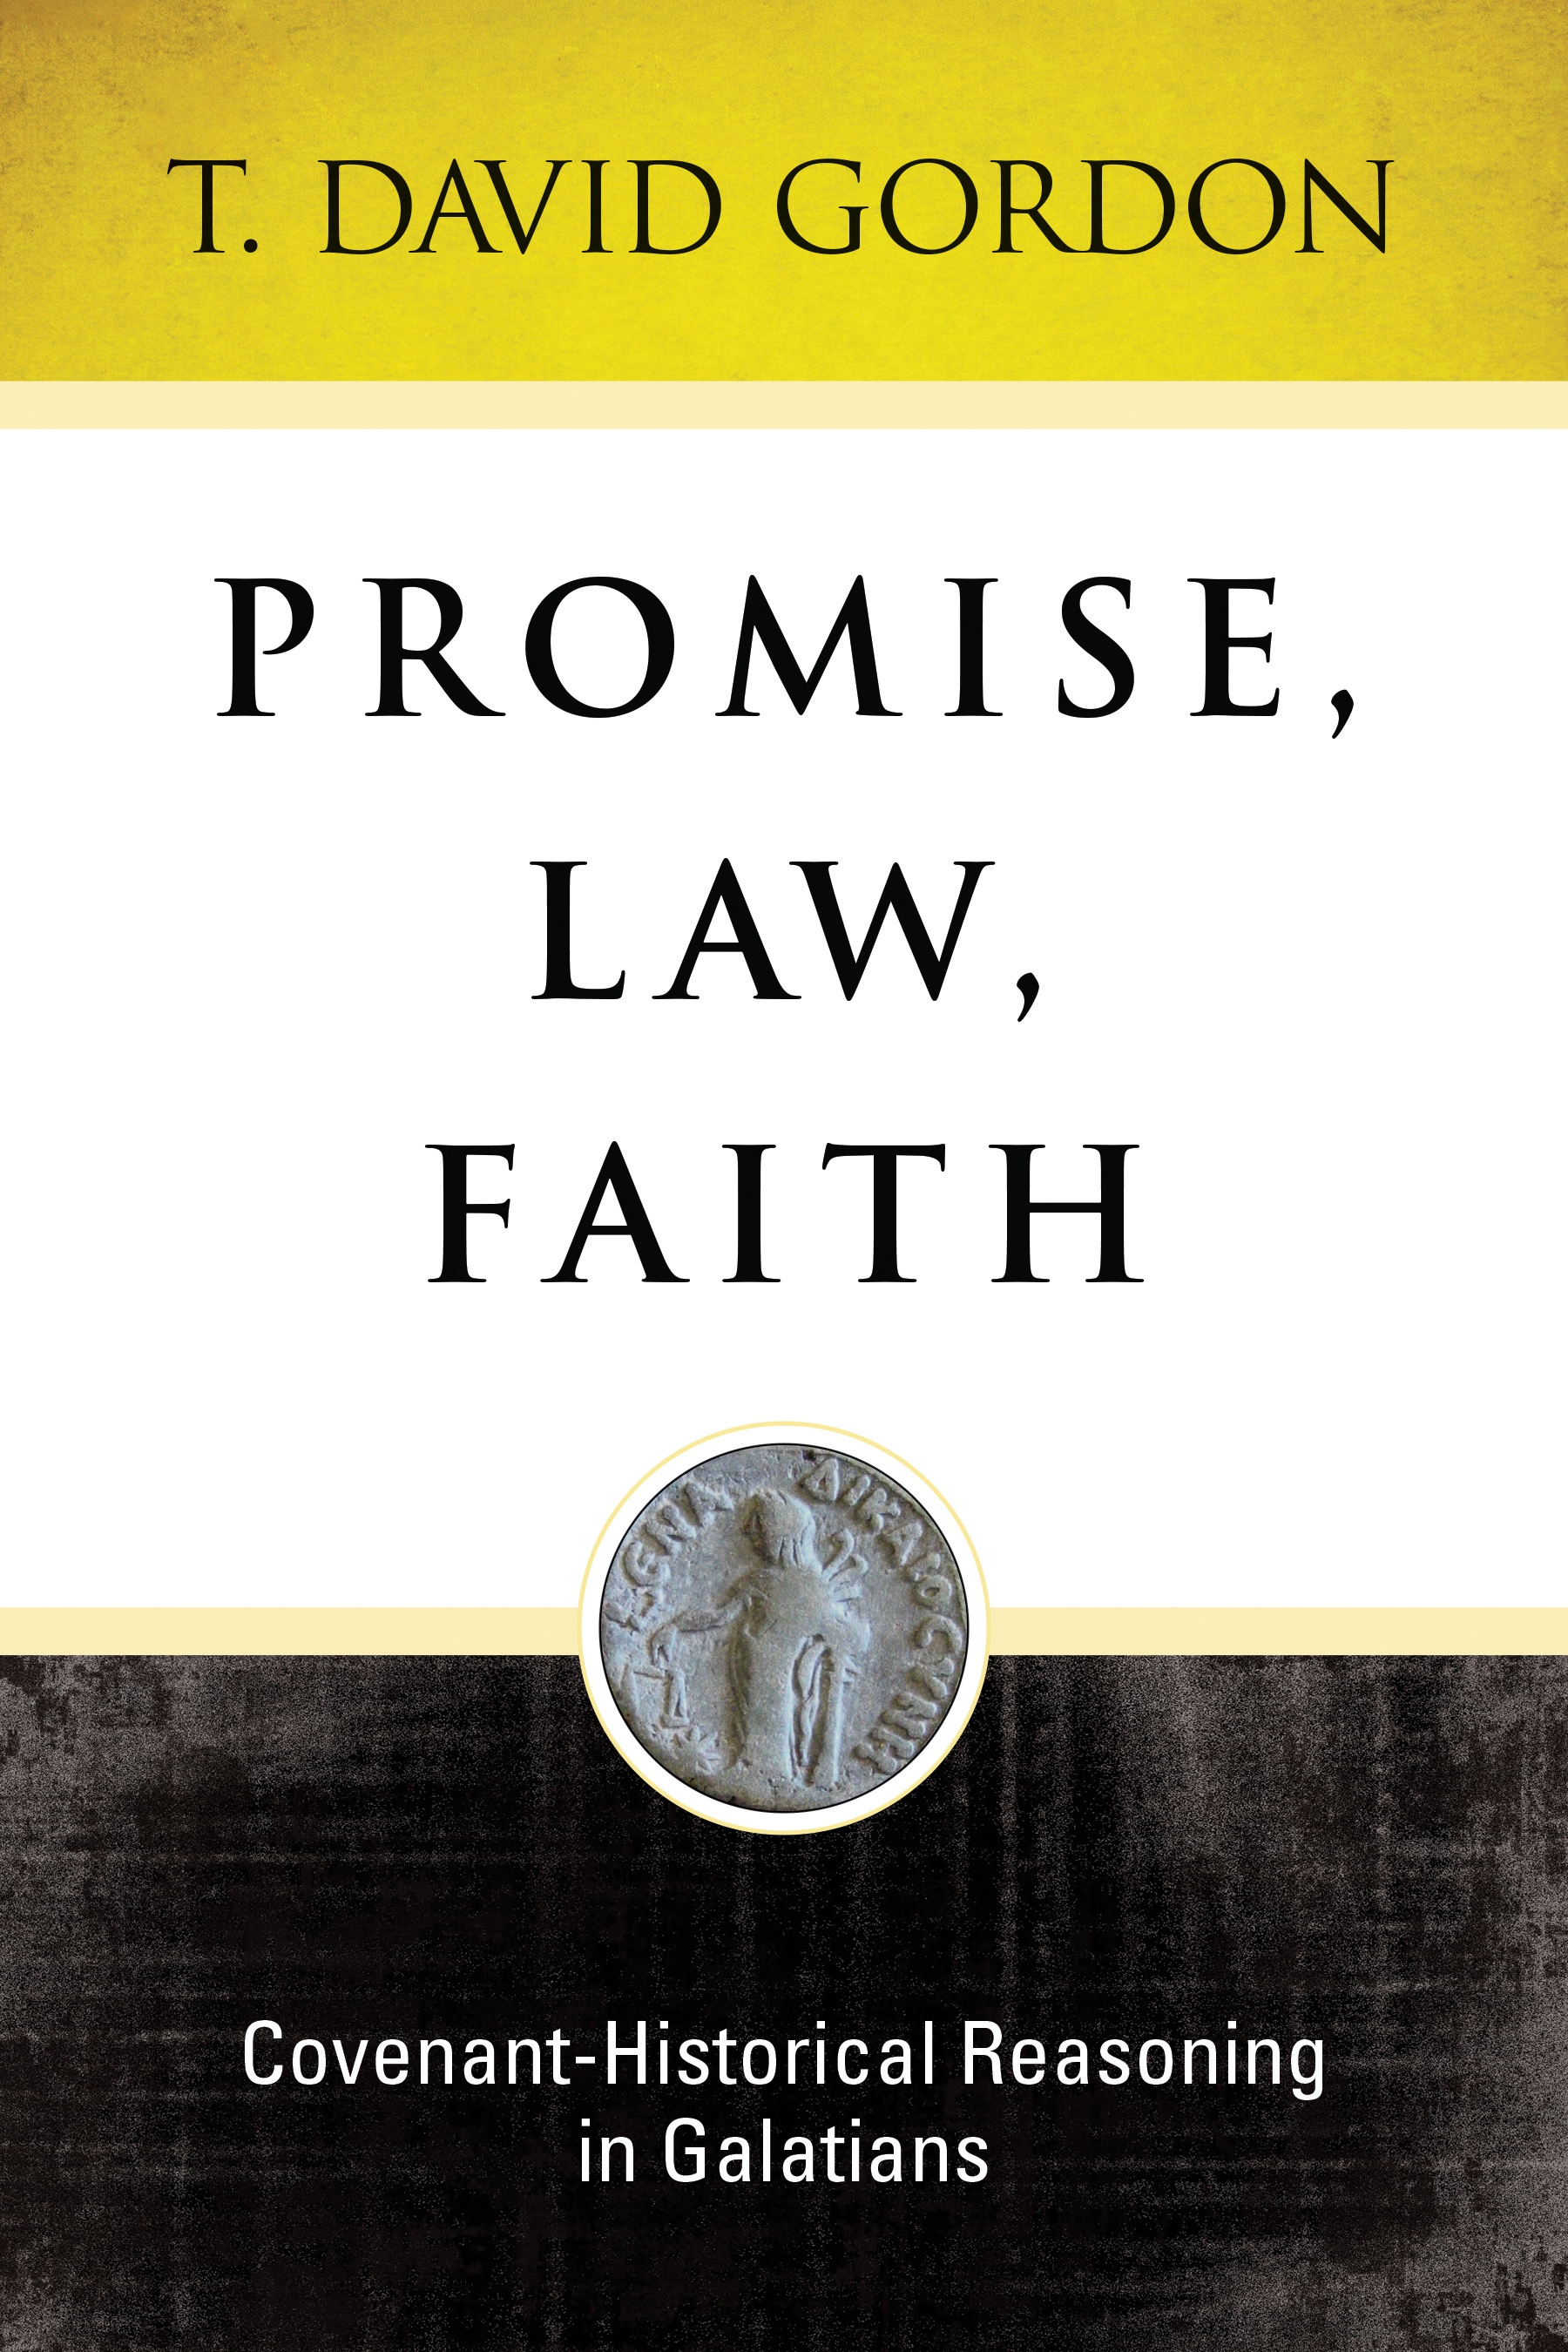 Promise Law Faith Covenant-Historical Covenant-Historical Reasonin